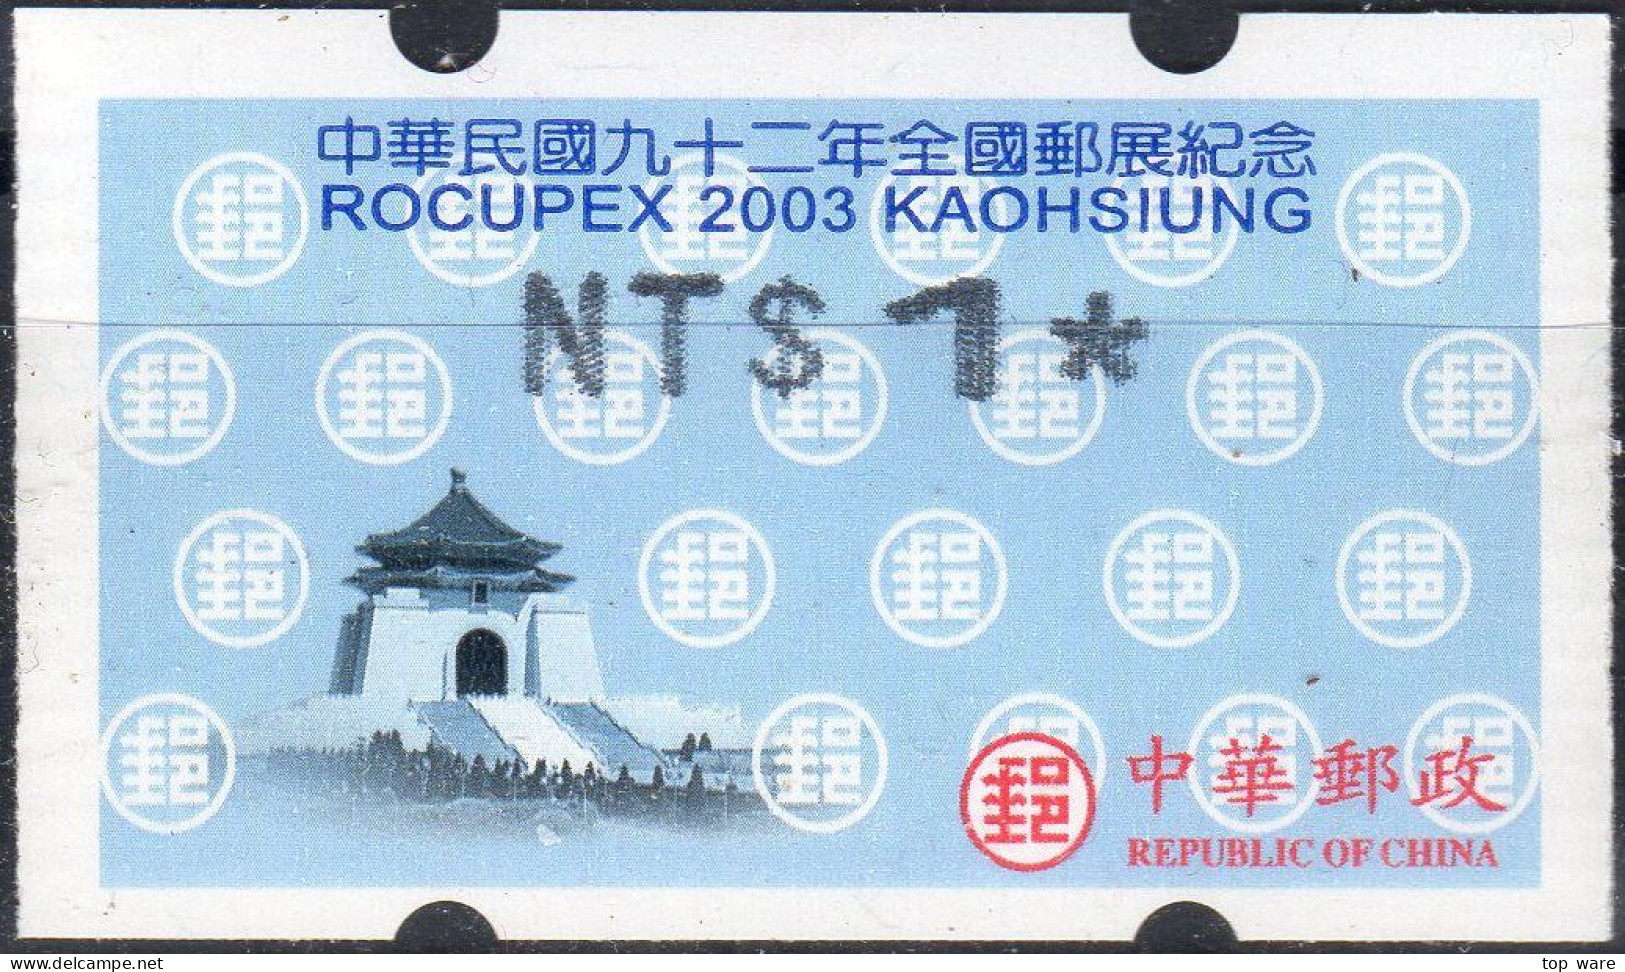 2003 Automatenmarken China Taiwan ROCUPEX 2003 KAOHSIUNG MiNr.4.1 Black ATM NT$1 MNH Nagler Kiosk Etiquetas - Distributors